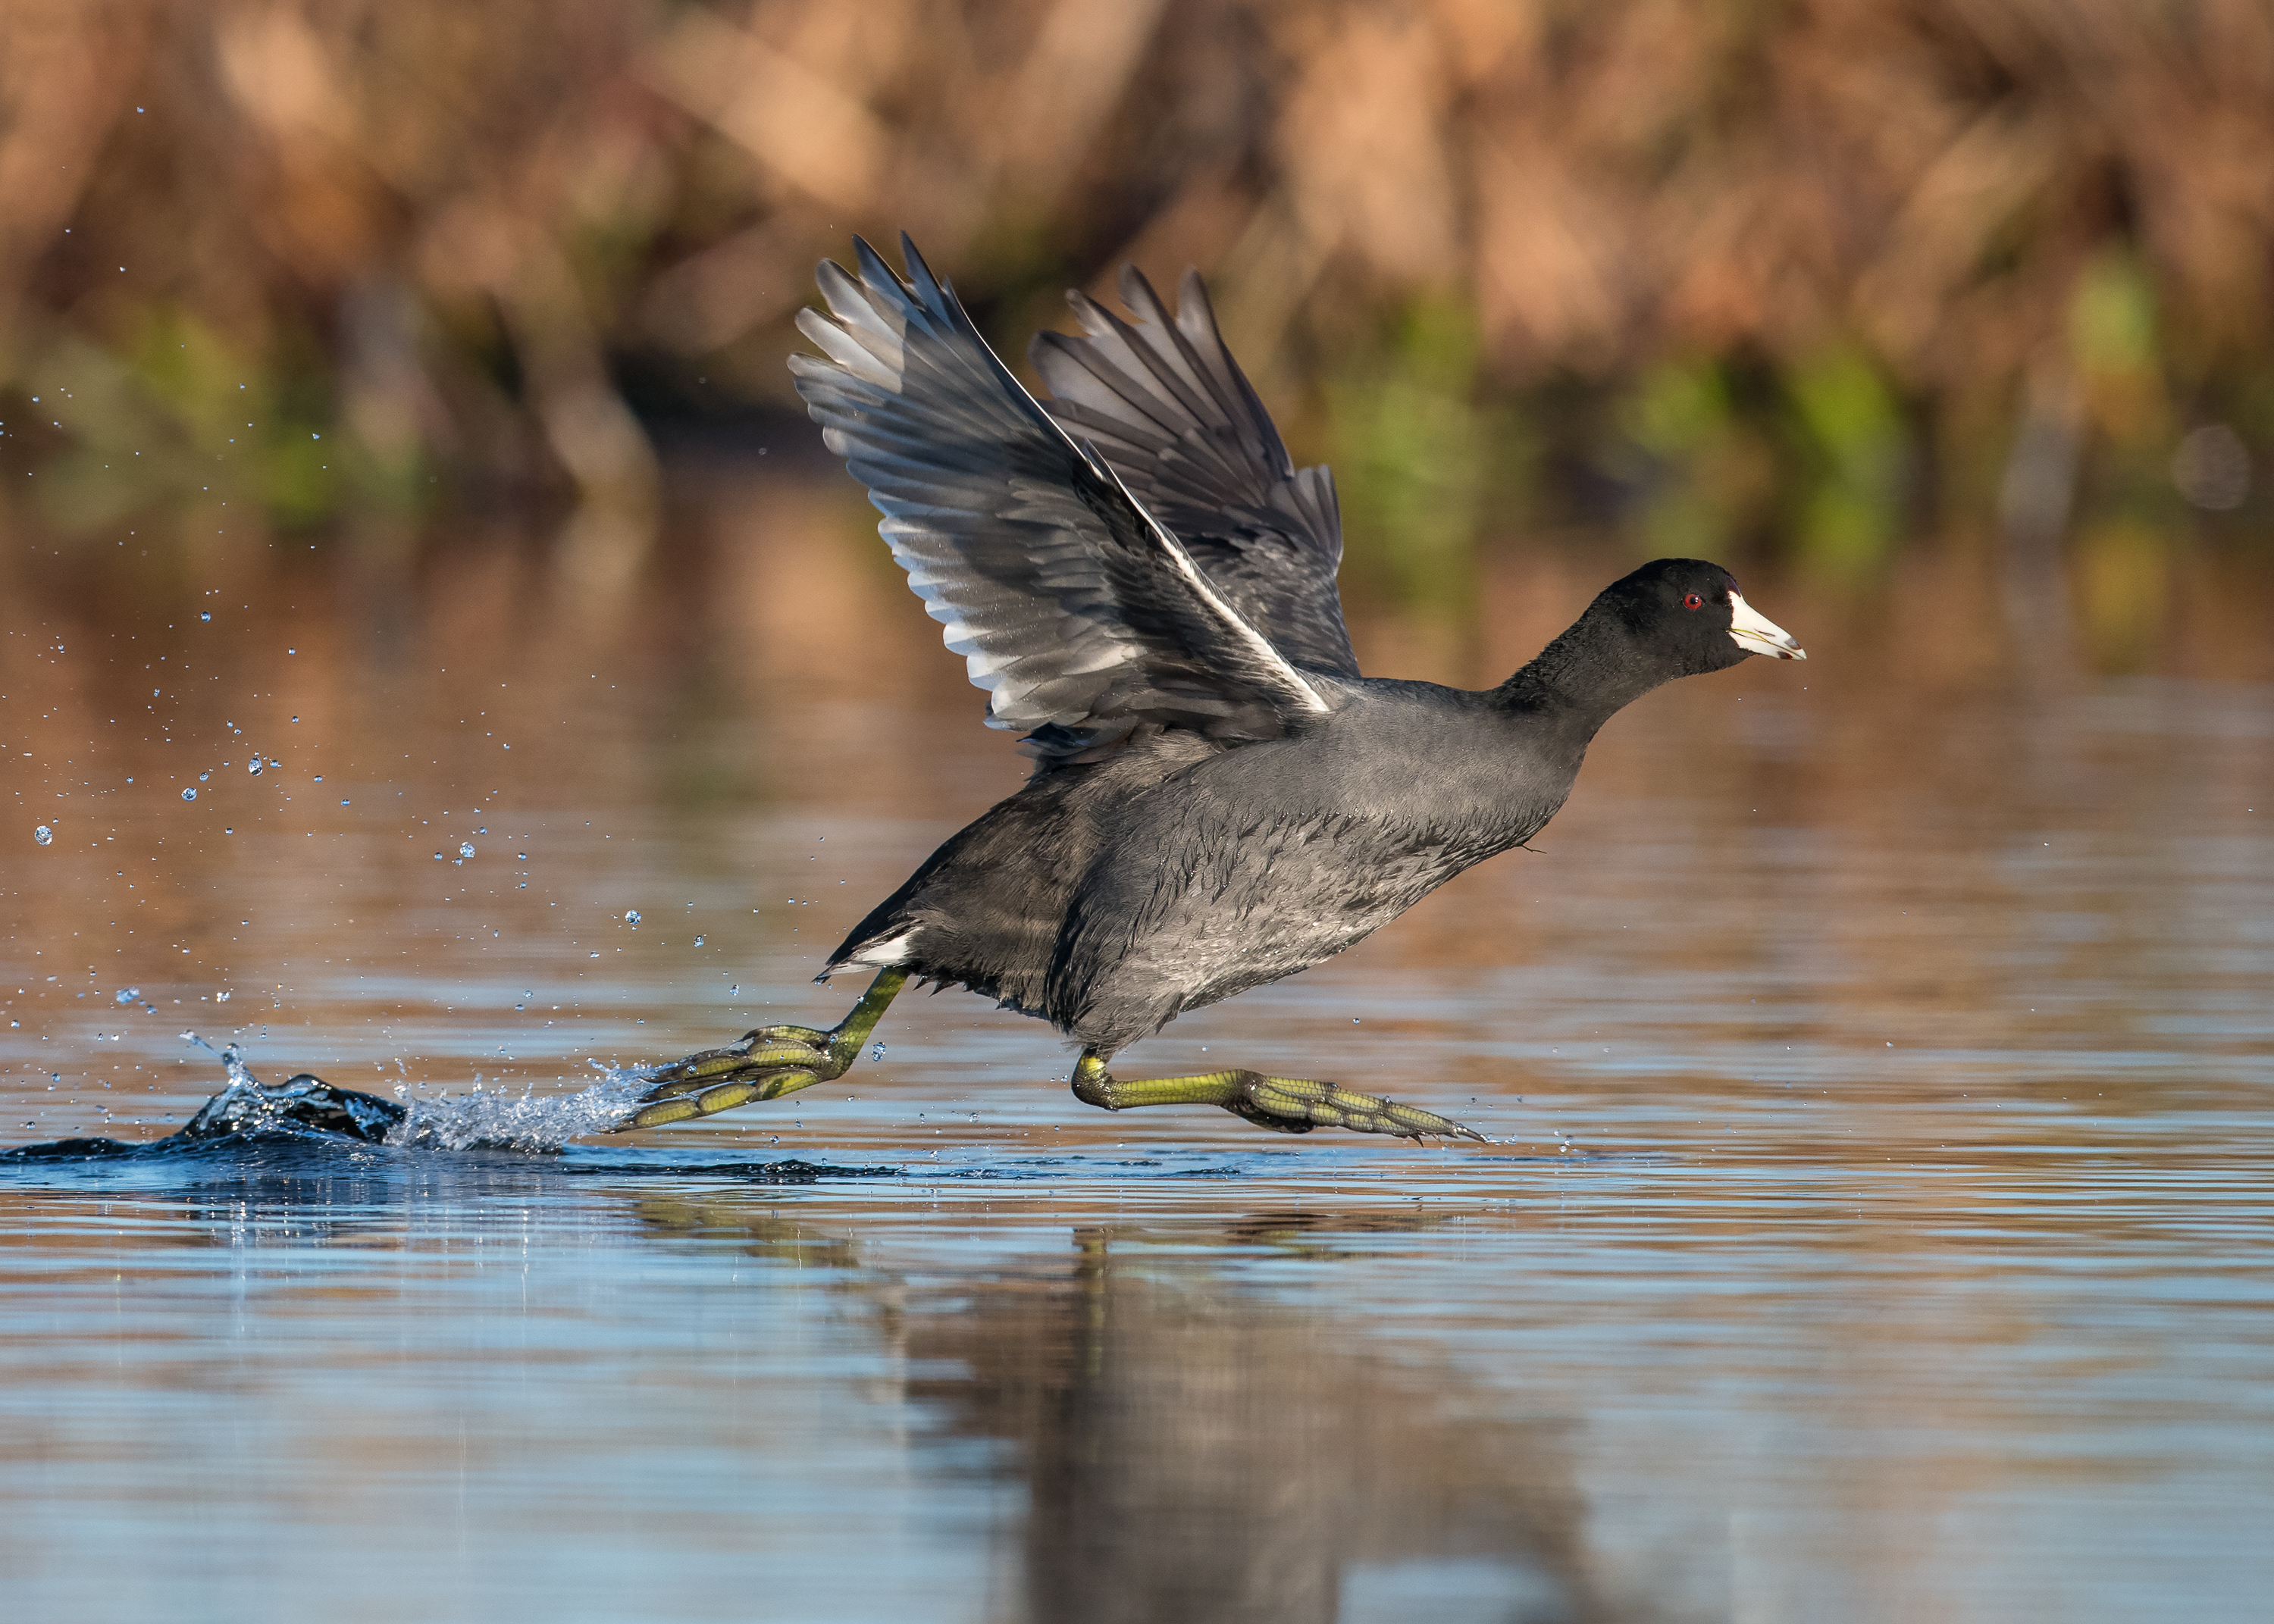 A black bird running on shallow water.